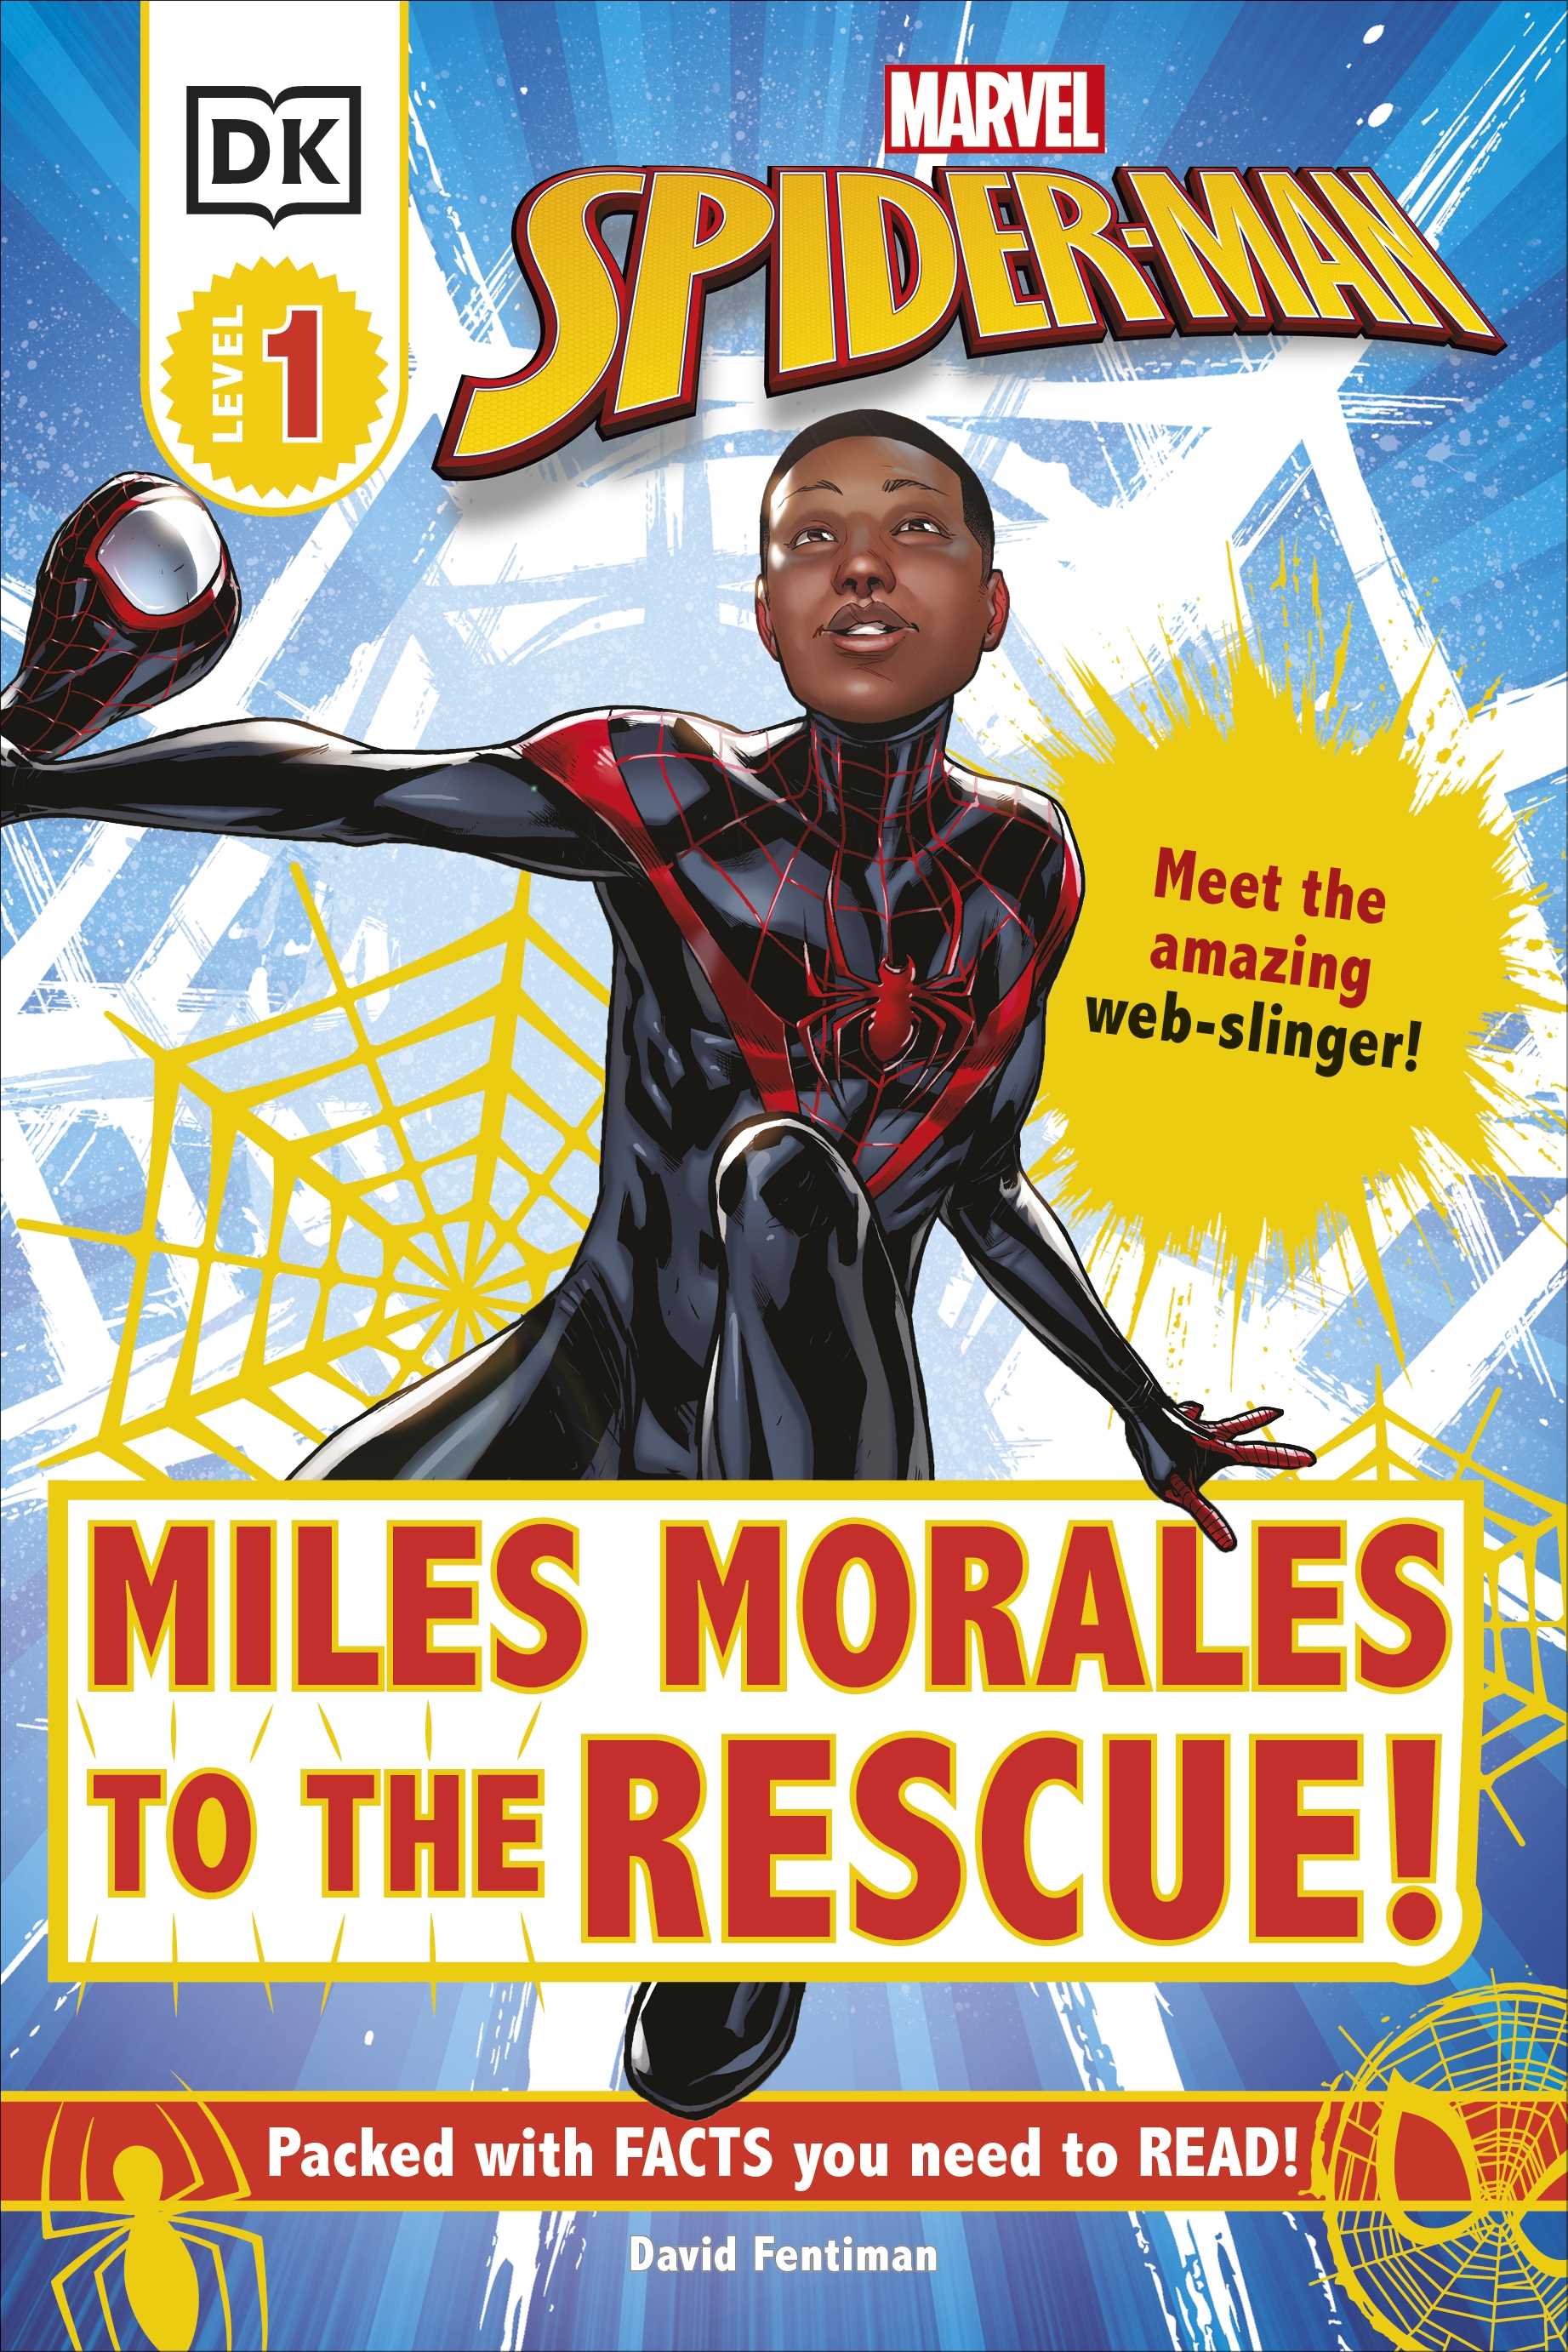 DK Reader Level 1: Marvel Spider-Man Miles Morales To The Rescue!